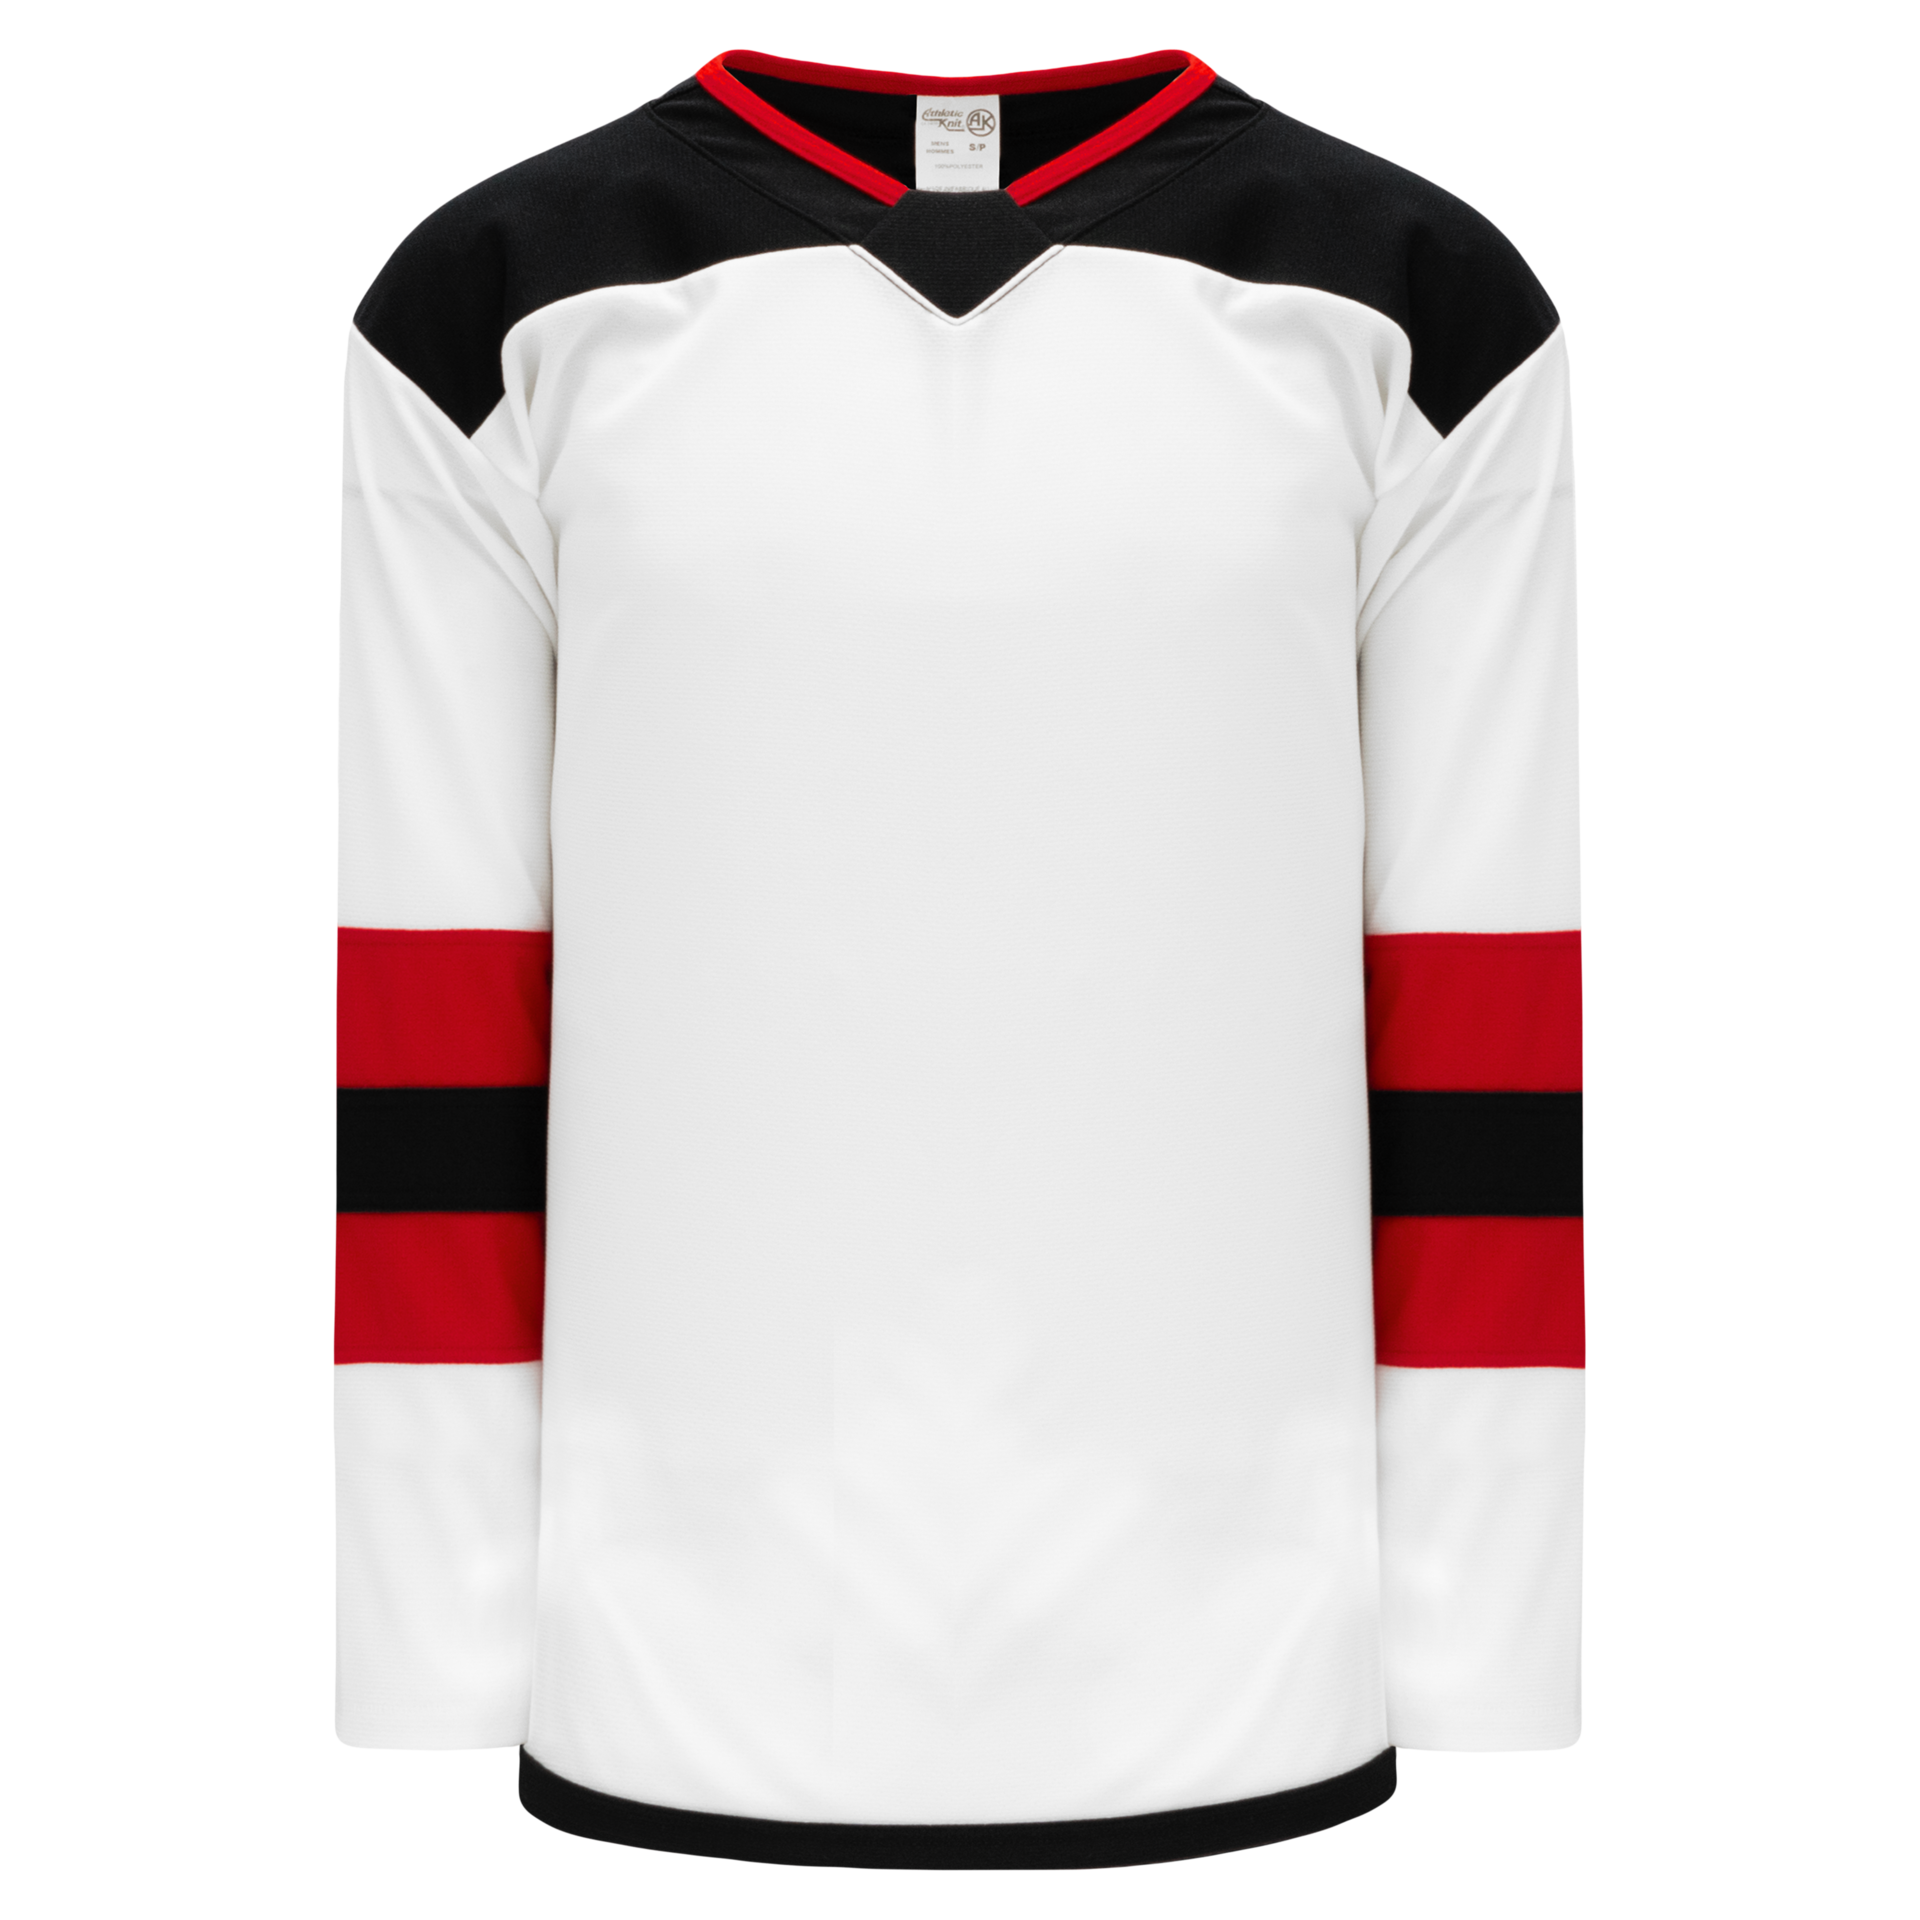 Athletic Knit (AK) HS2100-367 New Jersey Devils White Mesh Ice Hockey Socks Small - 21